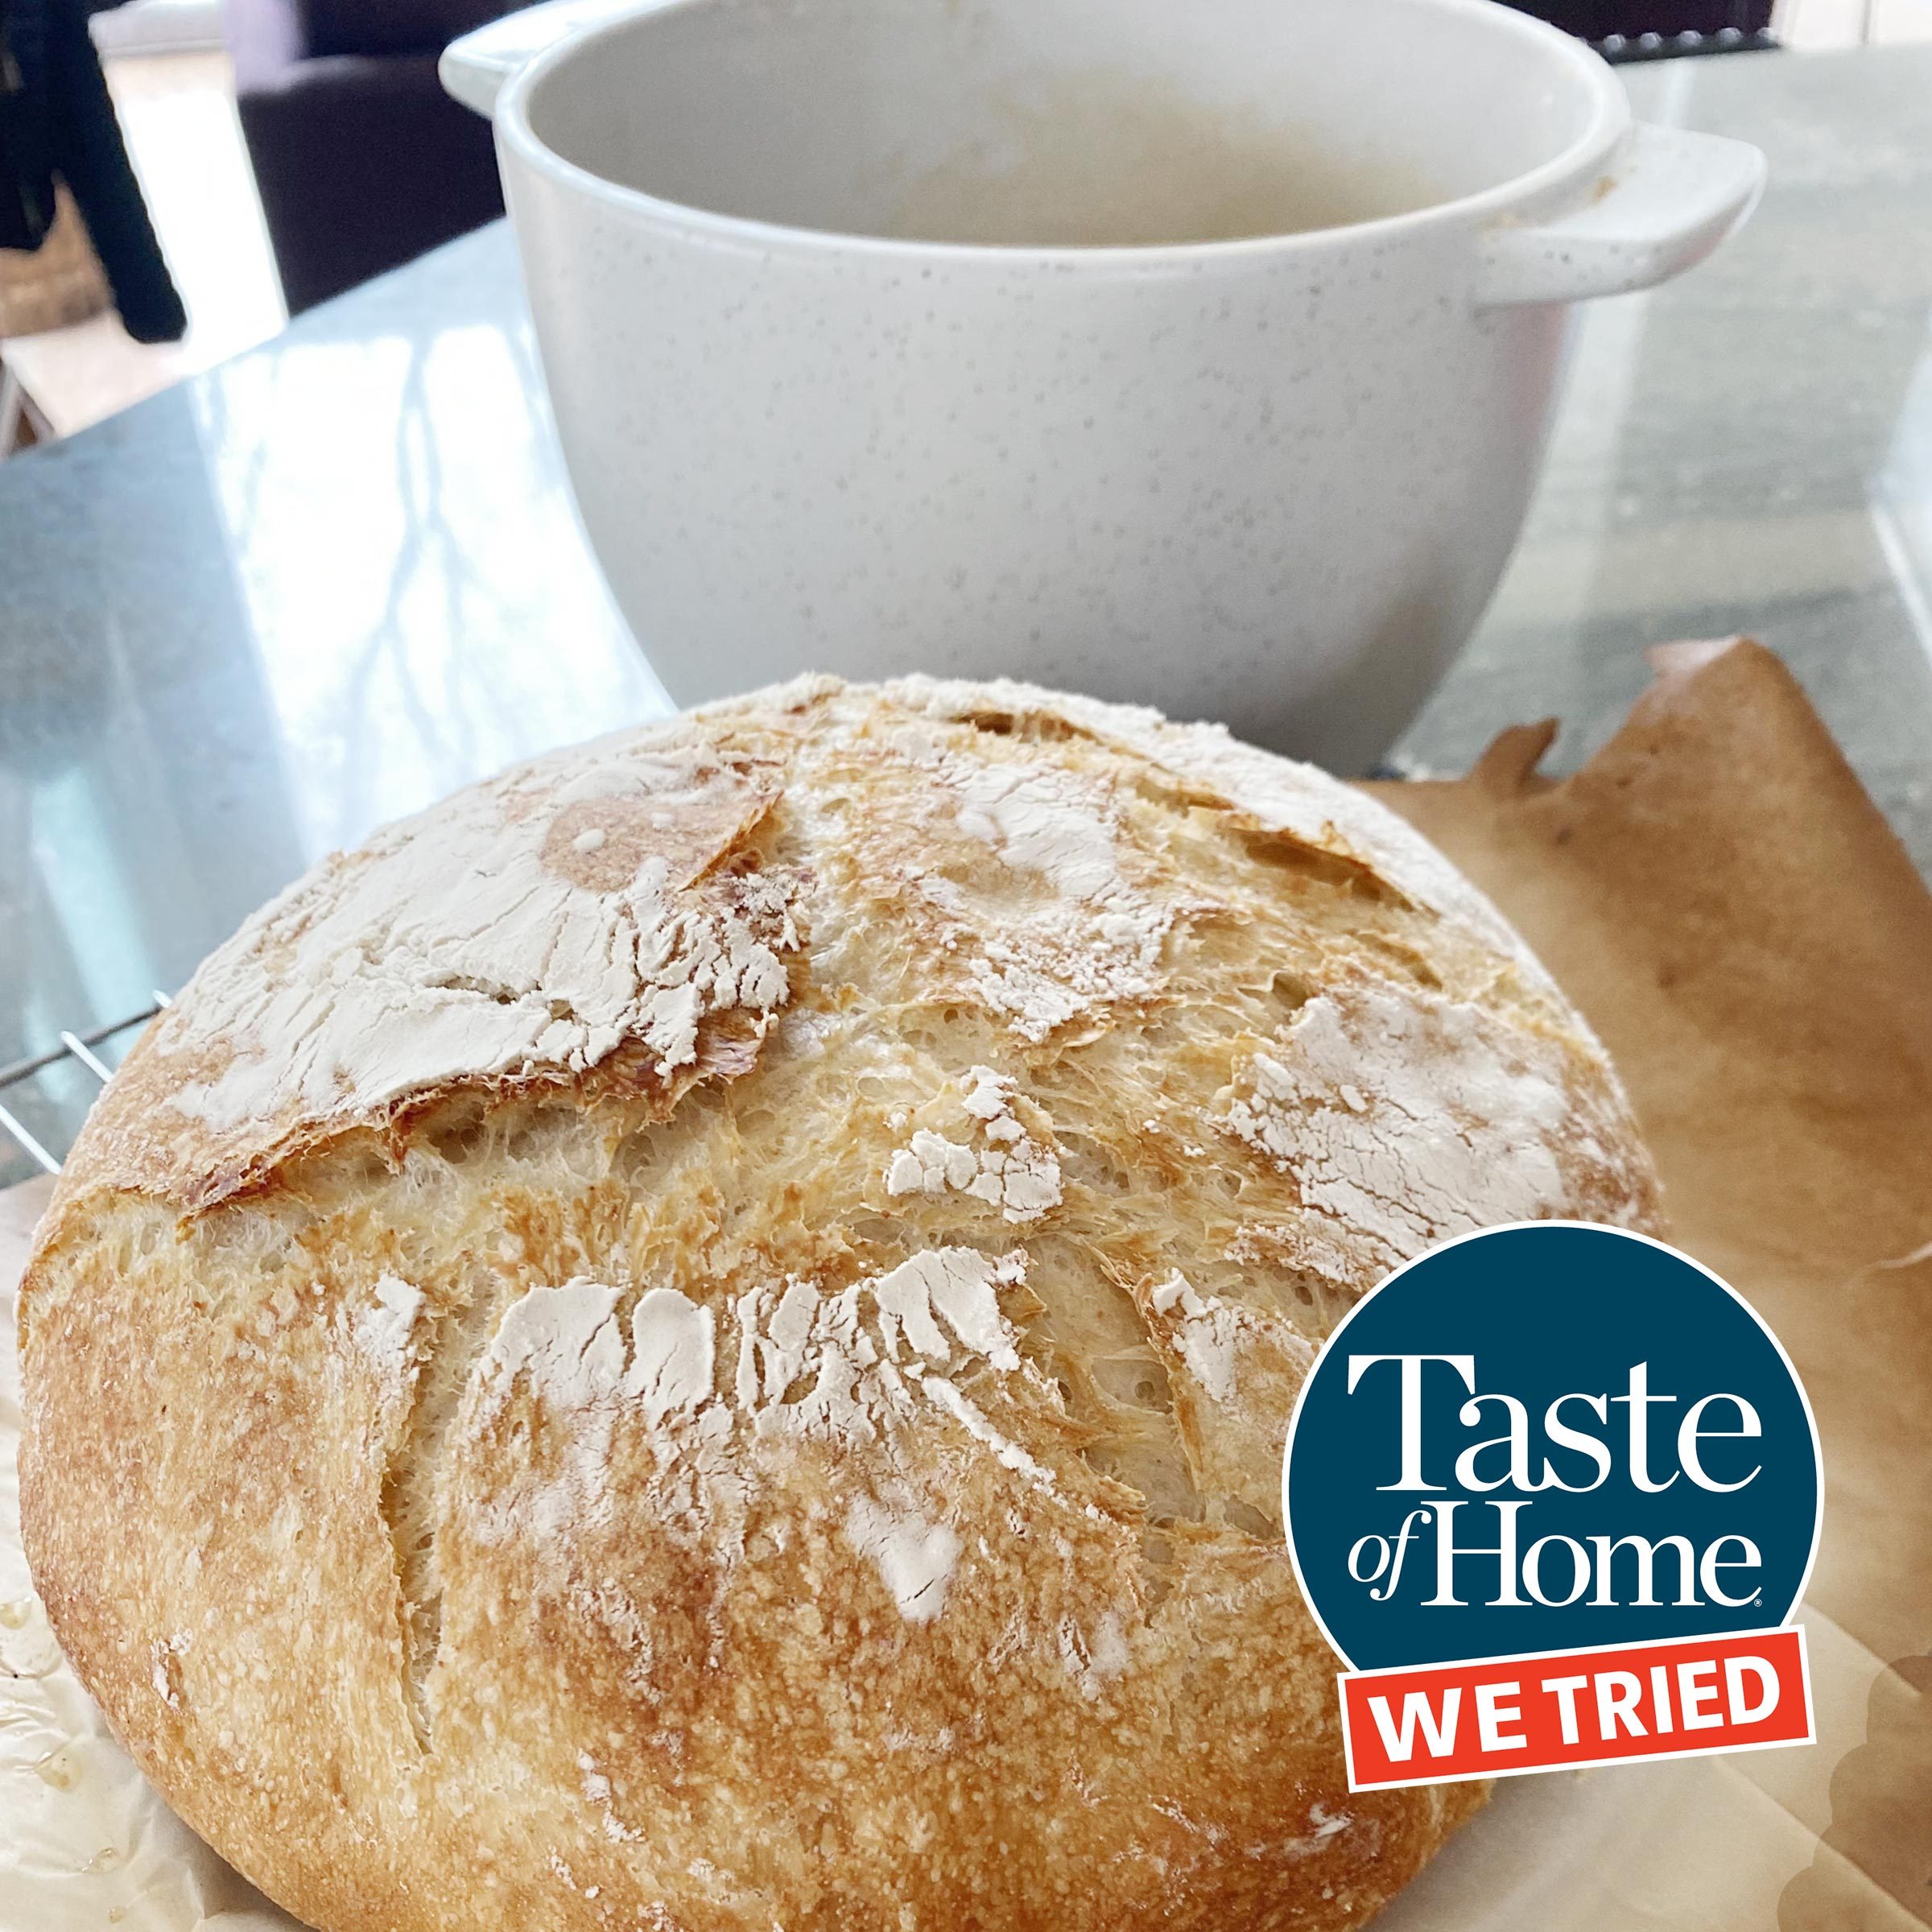 https://www.tasteofhome.com/wp-content/uploads/2022/04/we-tried-JV-edit-KitchenAid-Bread-scaled-1.jpg